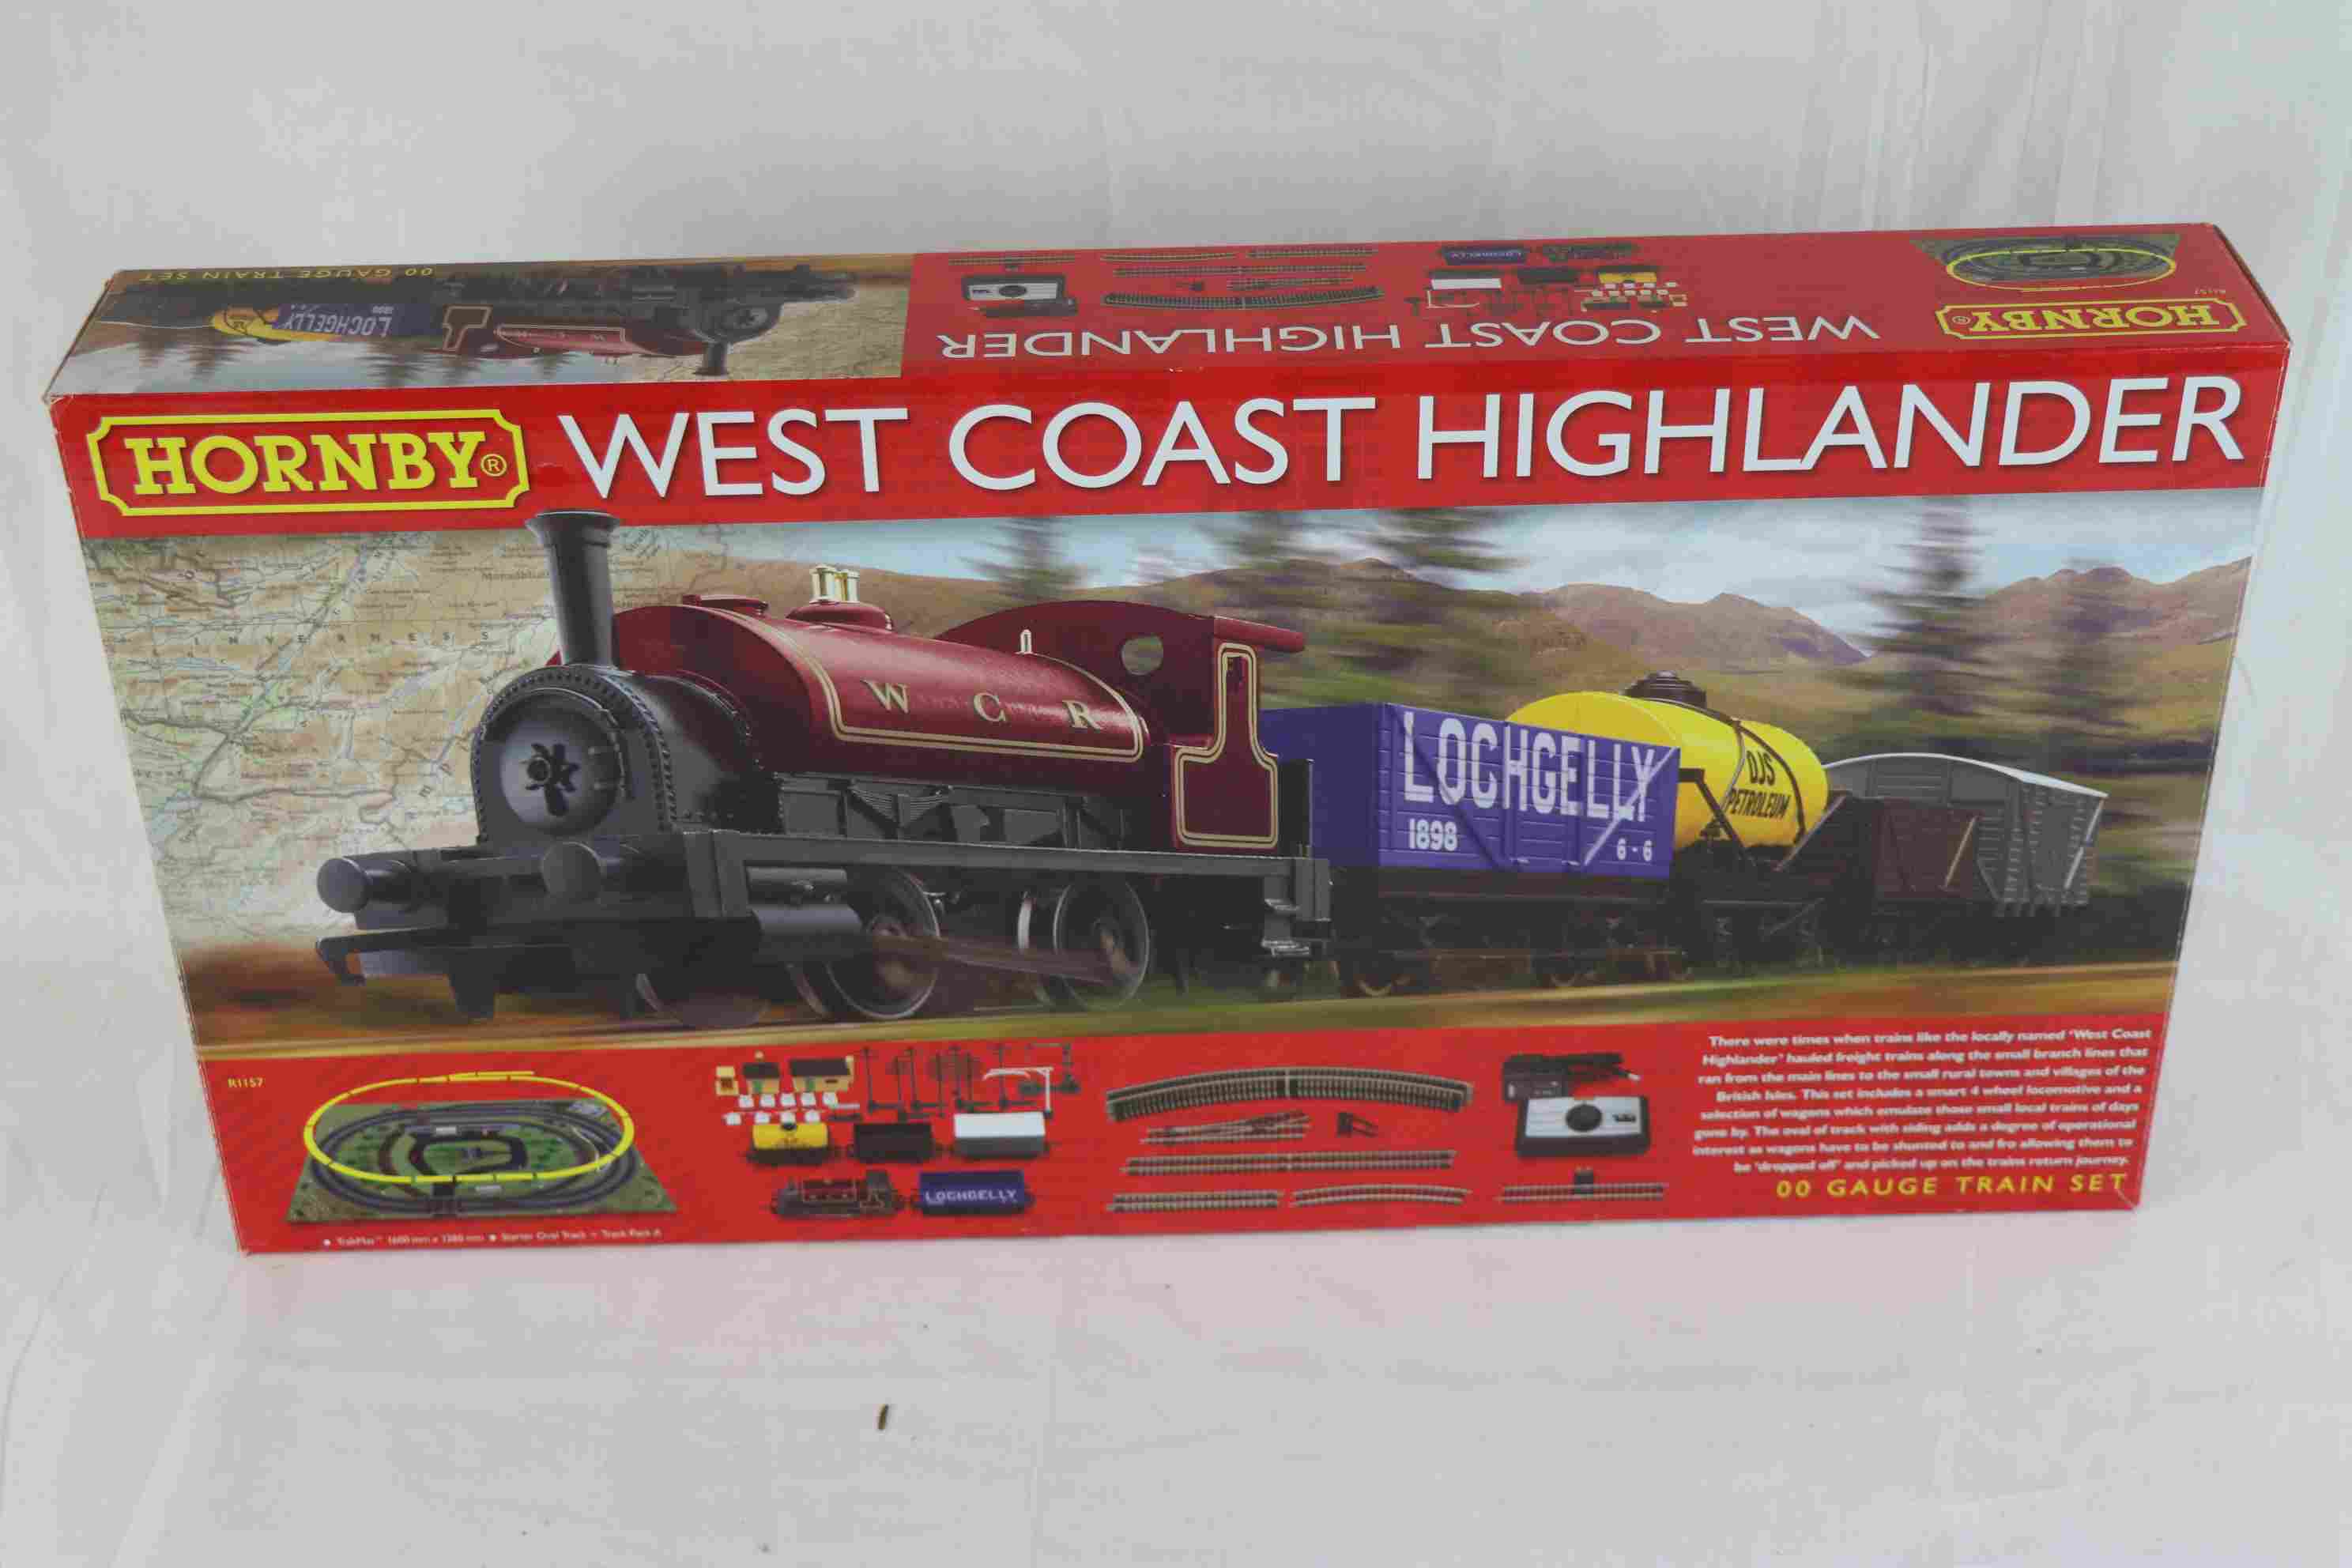 Boxed Hornby OO gauge R1157 West Coast Highlander appearing complete